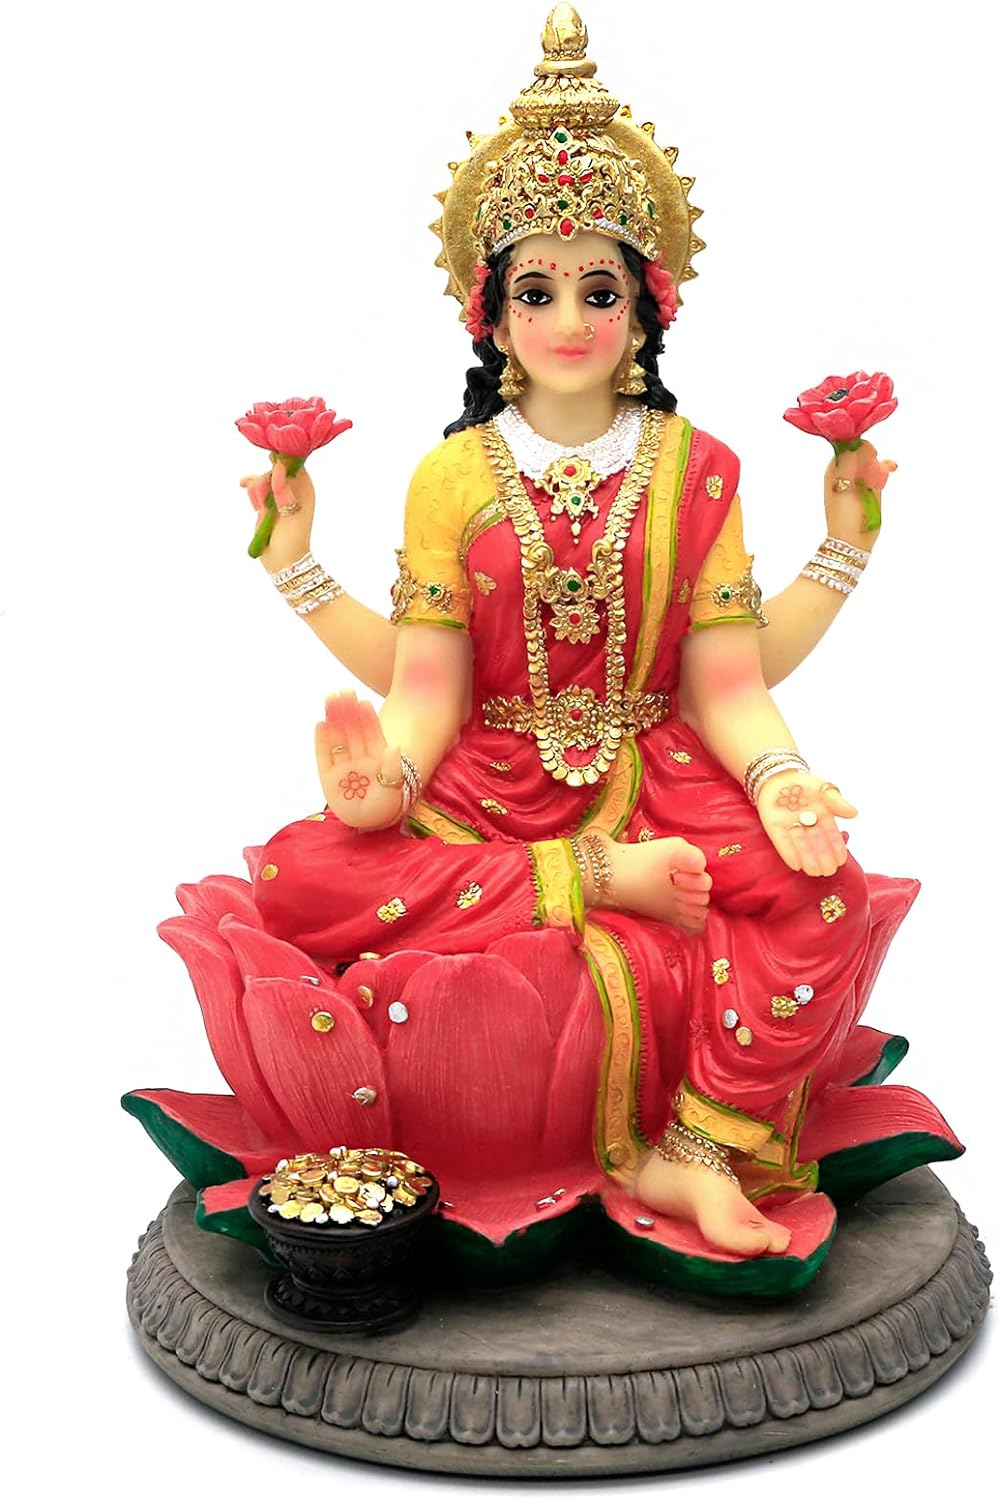 alikiki Indian Gift Goddess Laxmi Statue - 8.9”H Hindu Idol Lakshmi Sculpture Diwali Gift for Indian Pooja Item Decoration Indian Home Office Mandir Temple Altar Puja Housewarming Wedding